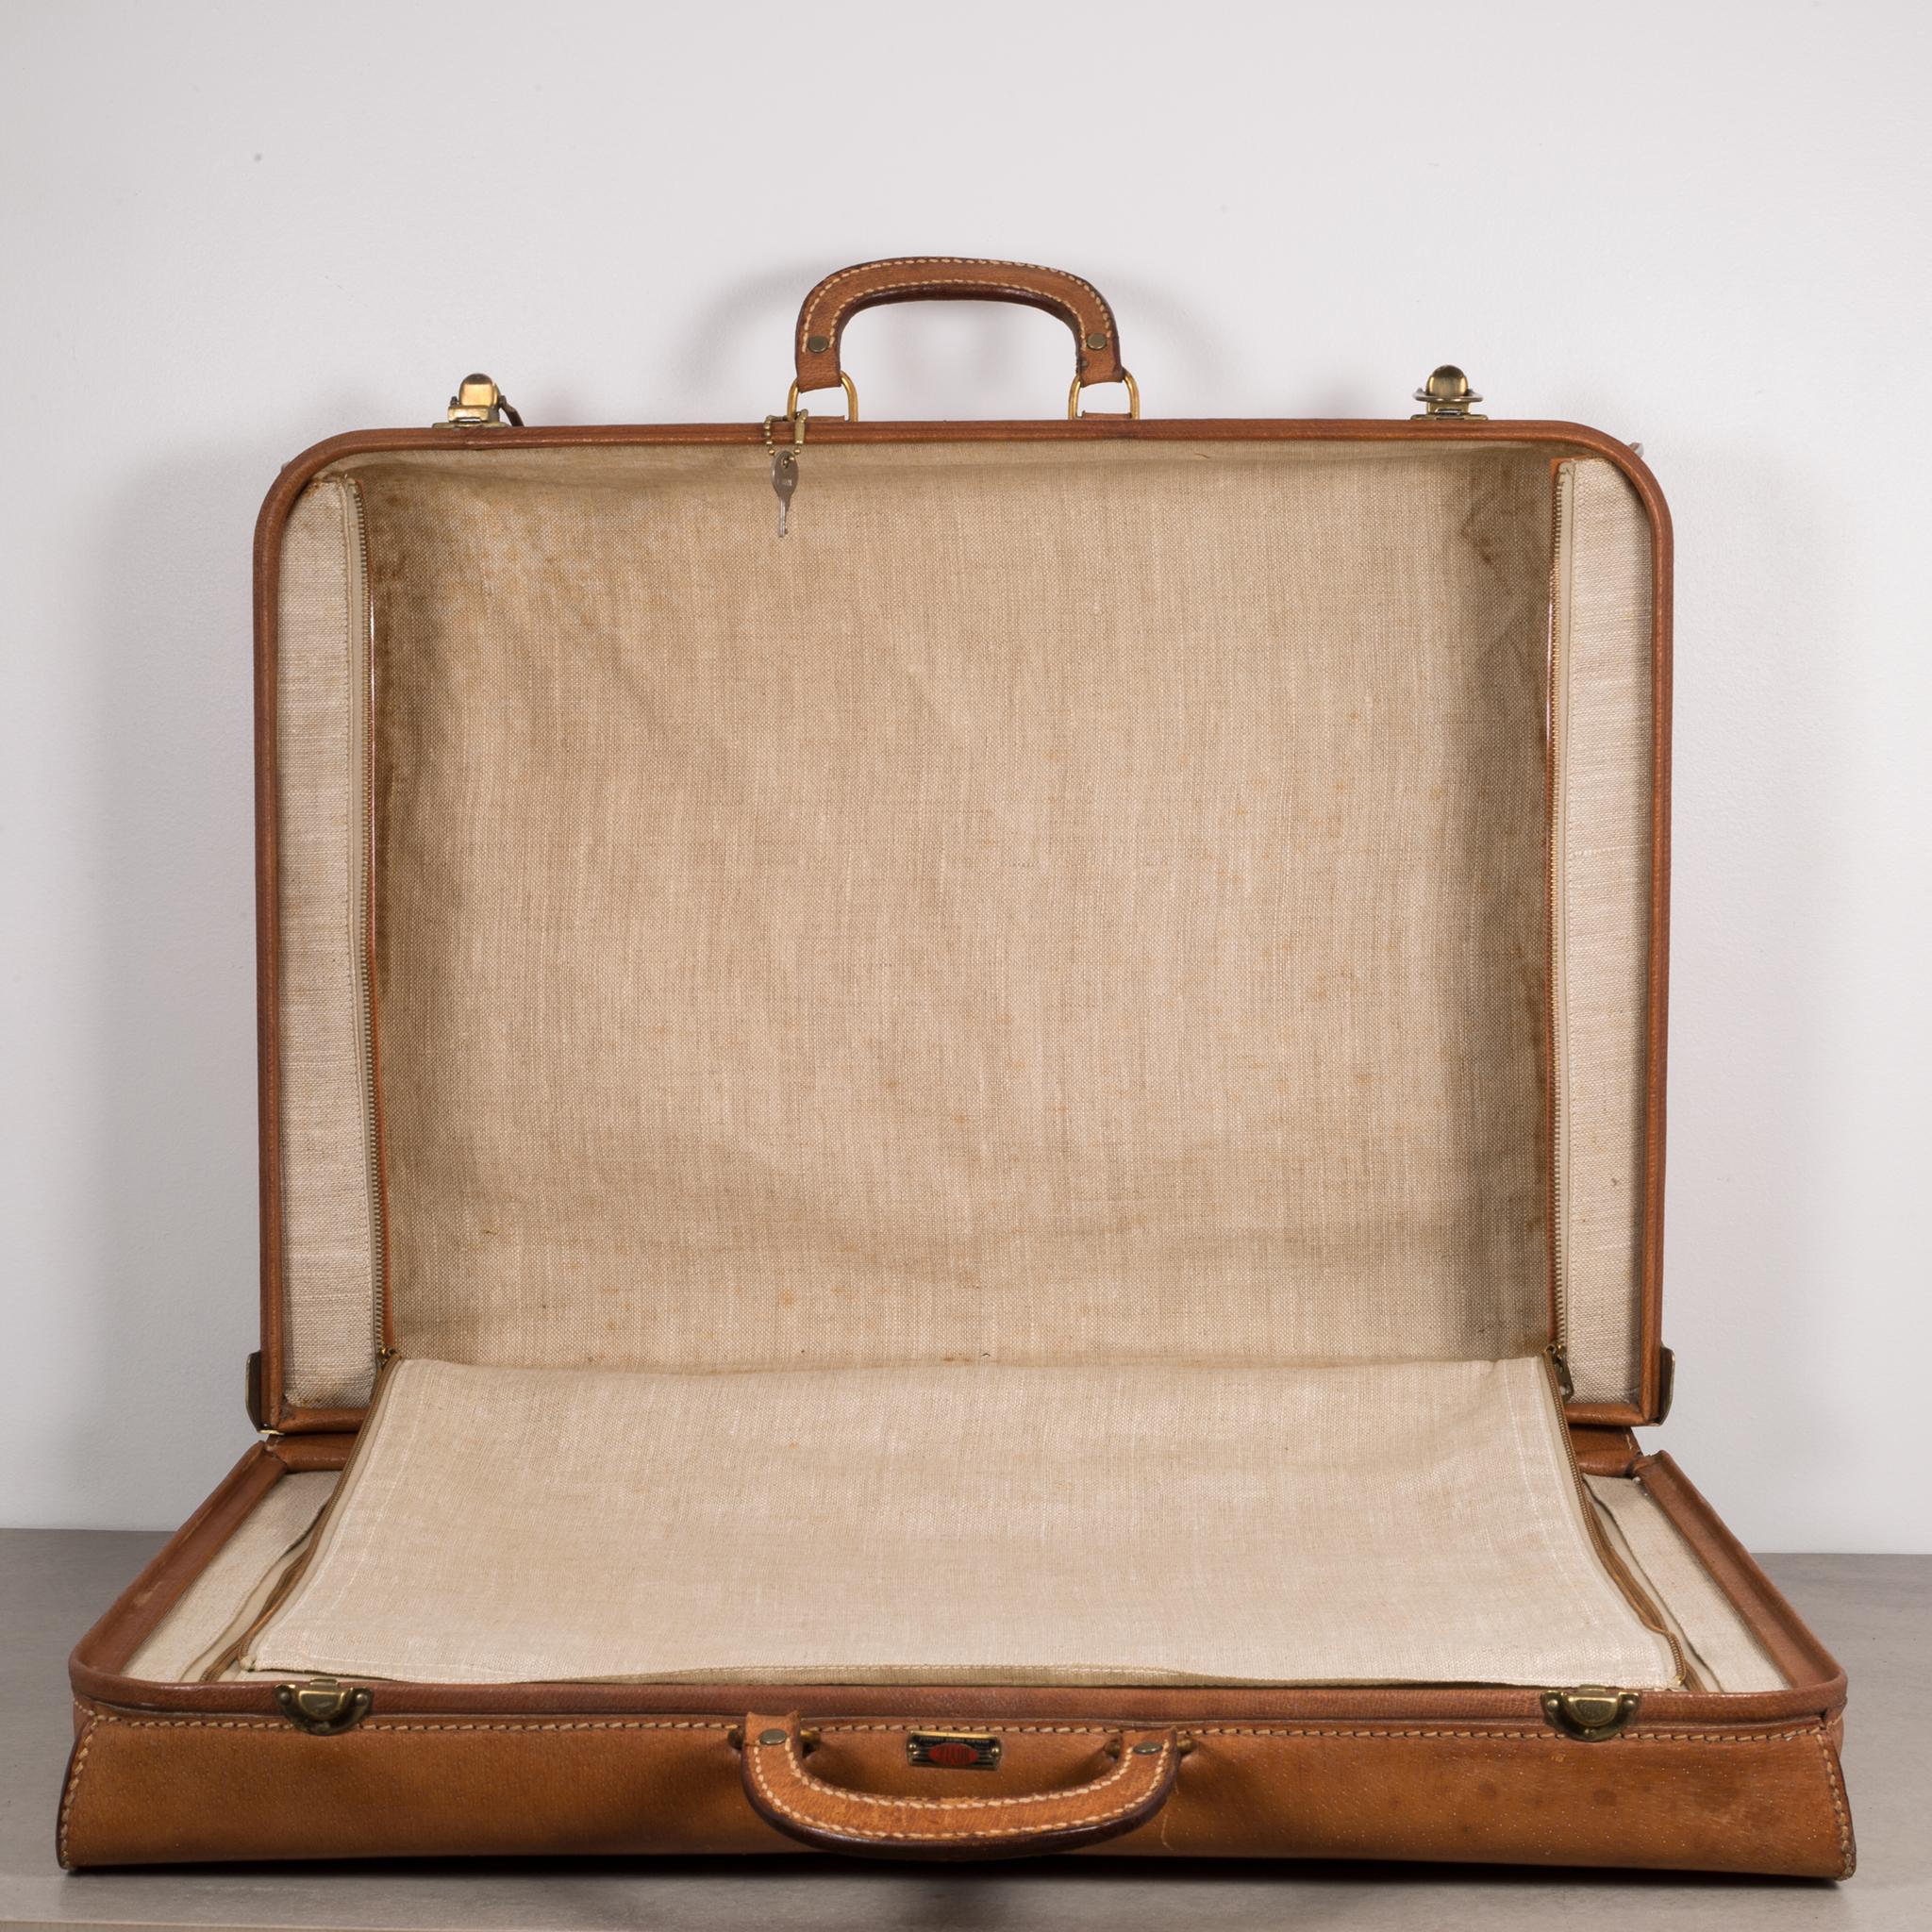 Brass Pigskin Luggage by Boyle, circa 1940